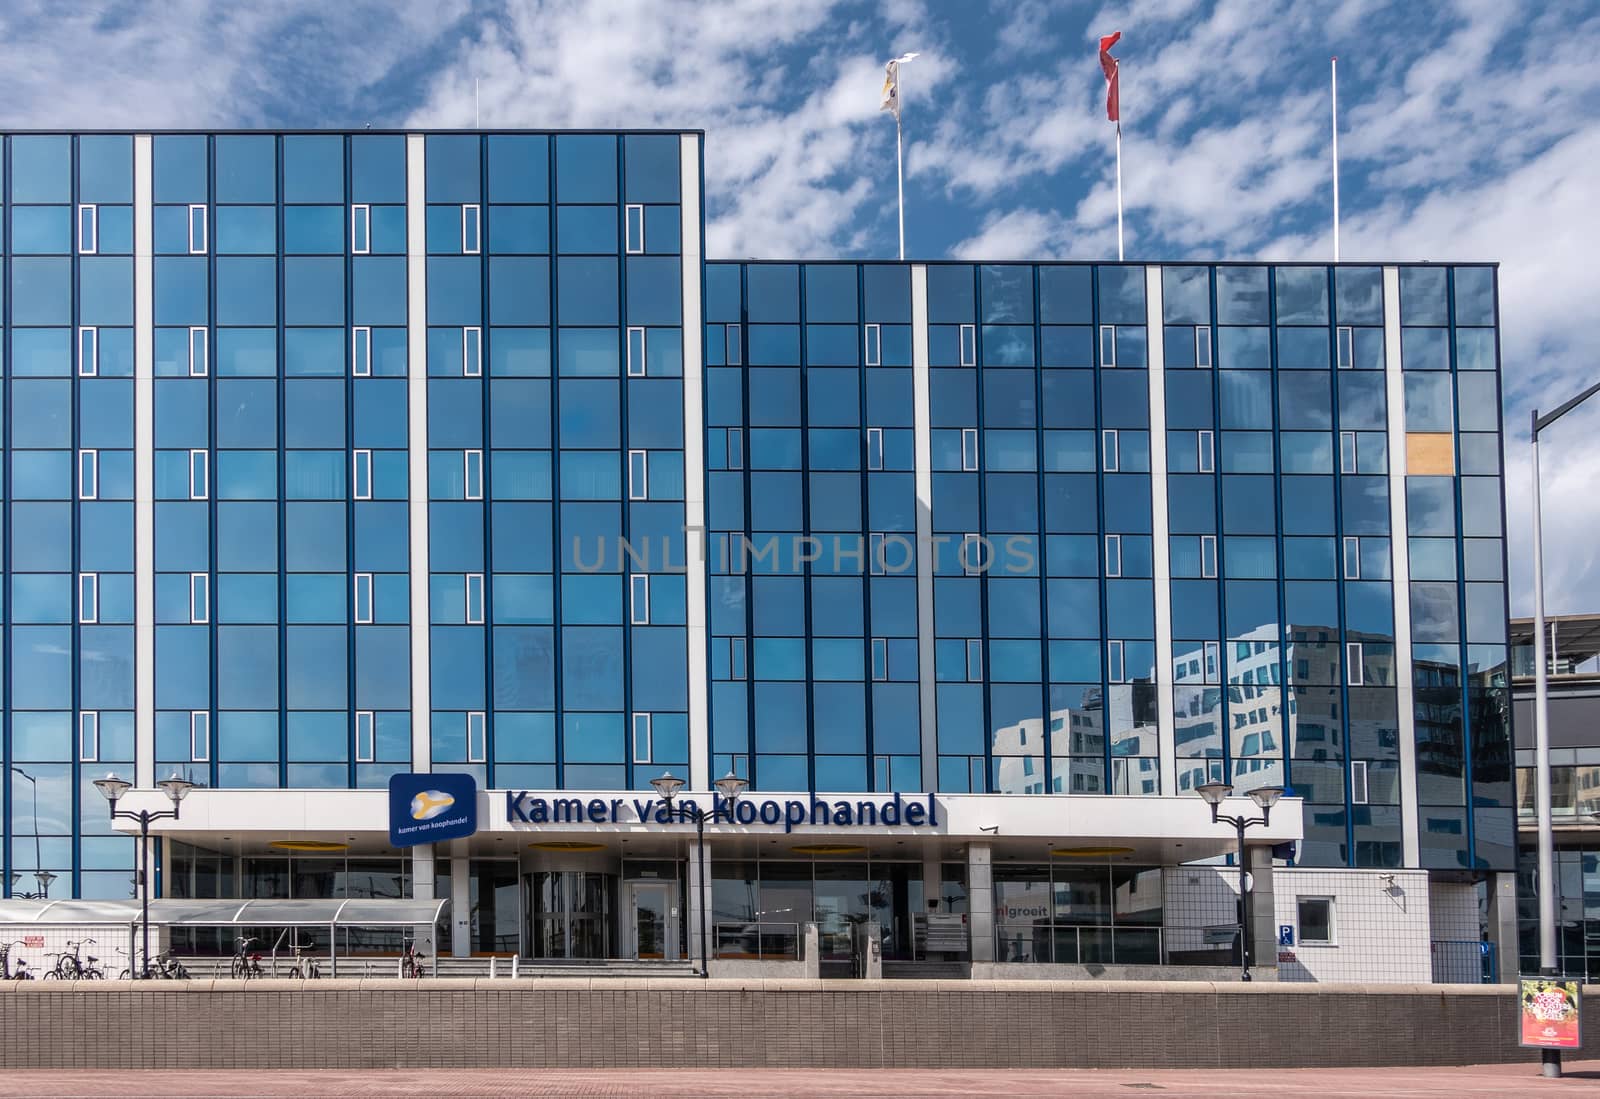 Amsterdam, the Netherlands - June 30, 2019: Modern glass facade building of Chamber of Commerce, Kamer van Koophandel, along De Ruijterkade opposite Ijdok, with flags and blue white sky.